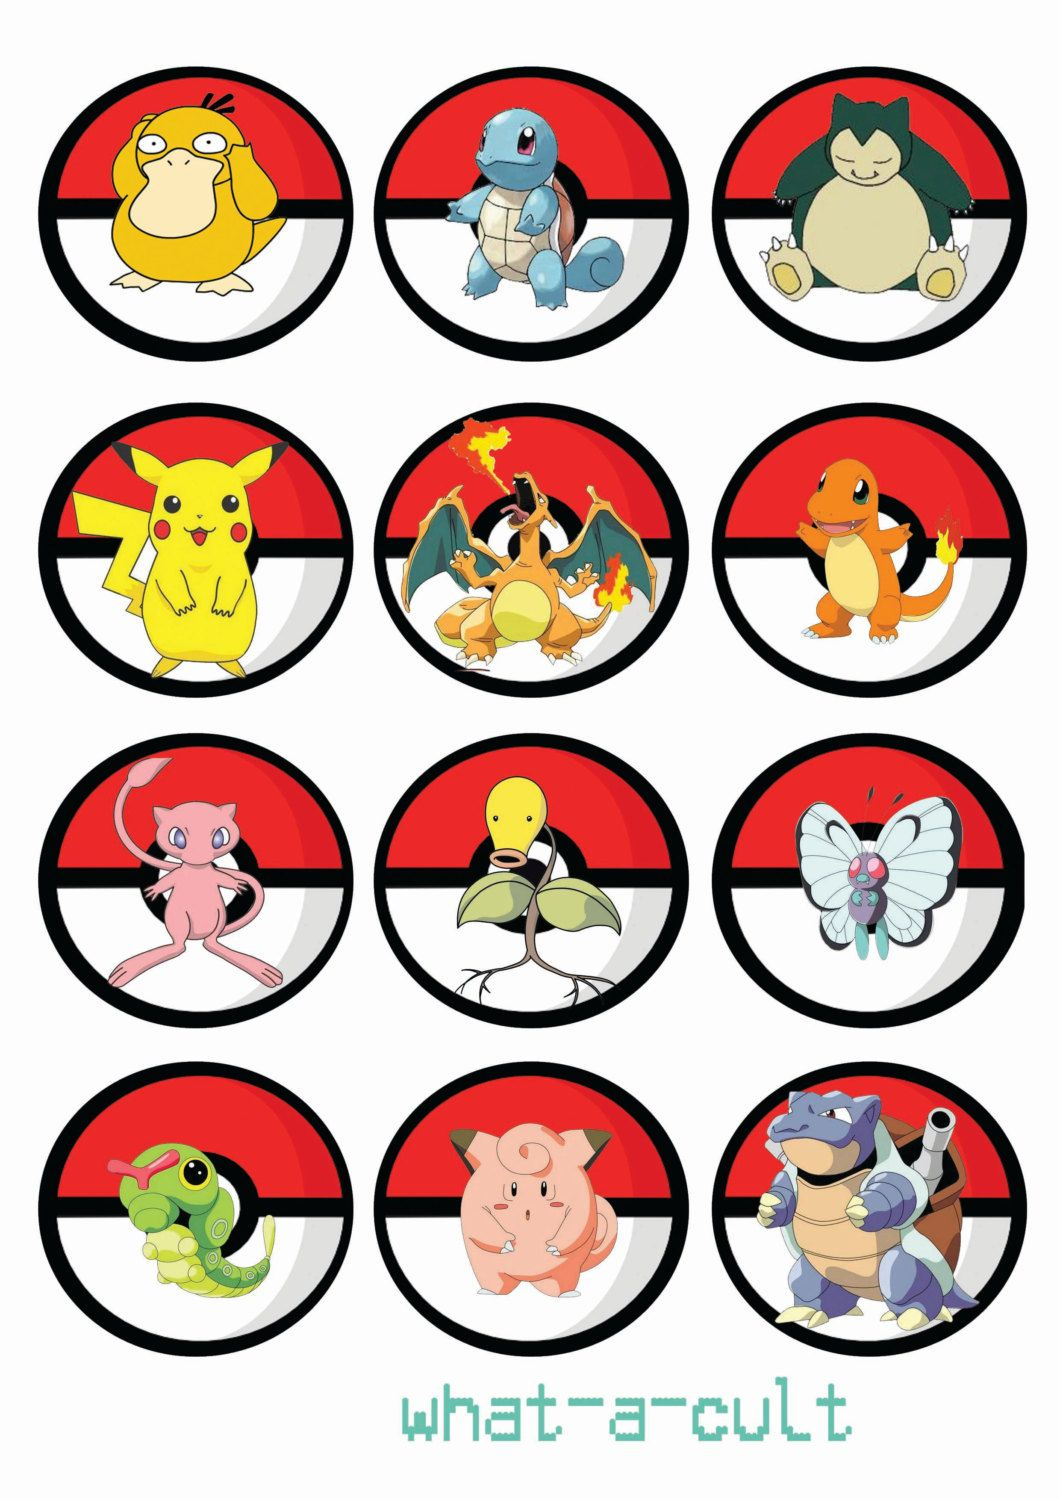 Free Printable Pokemon Cupcake Toppers | Pokemon In 2019 | Pinterest - Free Printable Pokemon Pictures